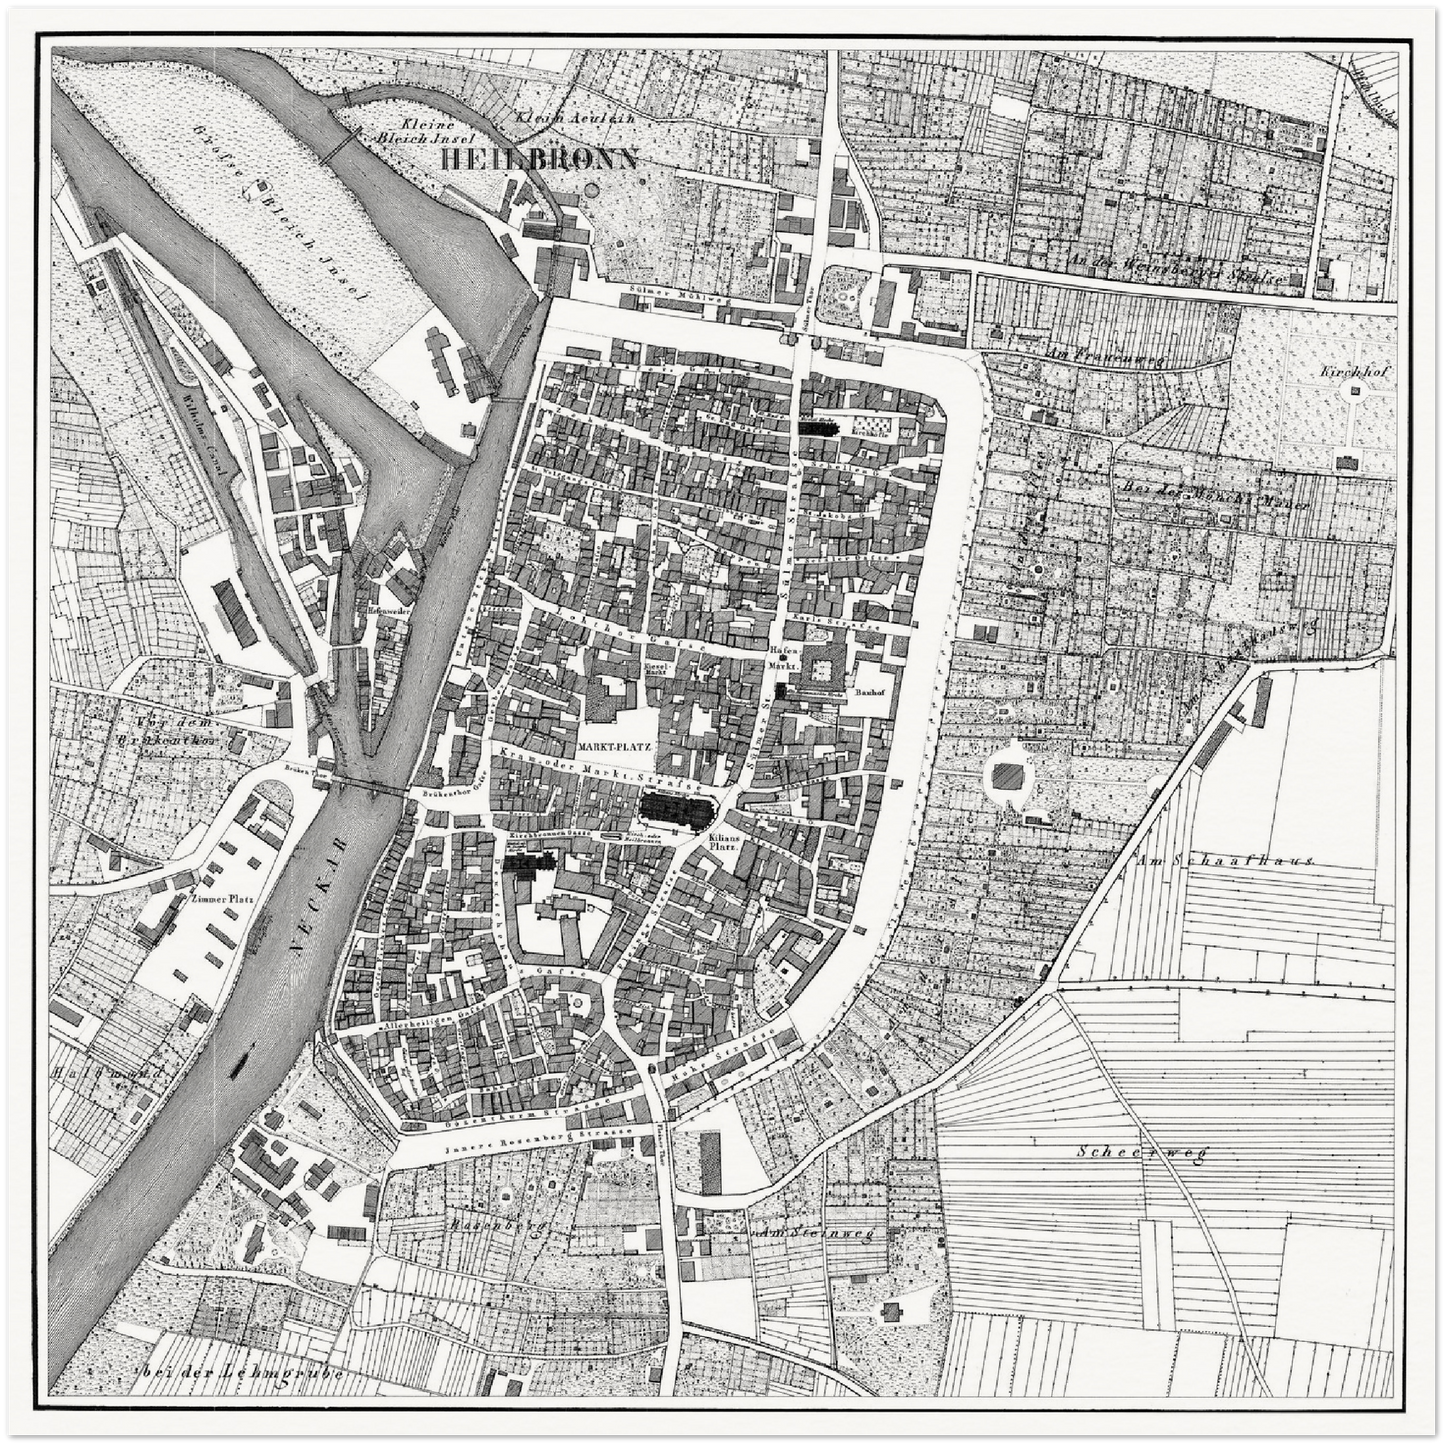 Historische Stadtansicht Heilbronn um 1834